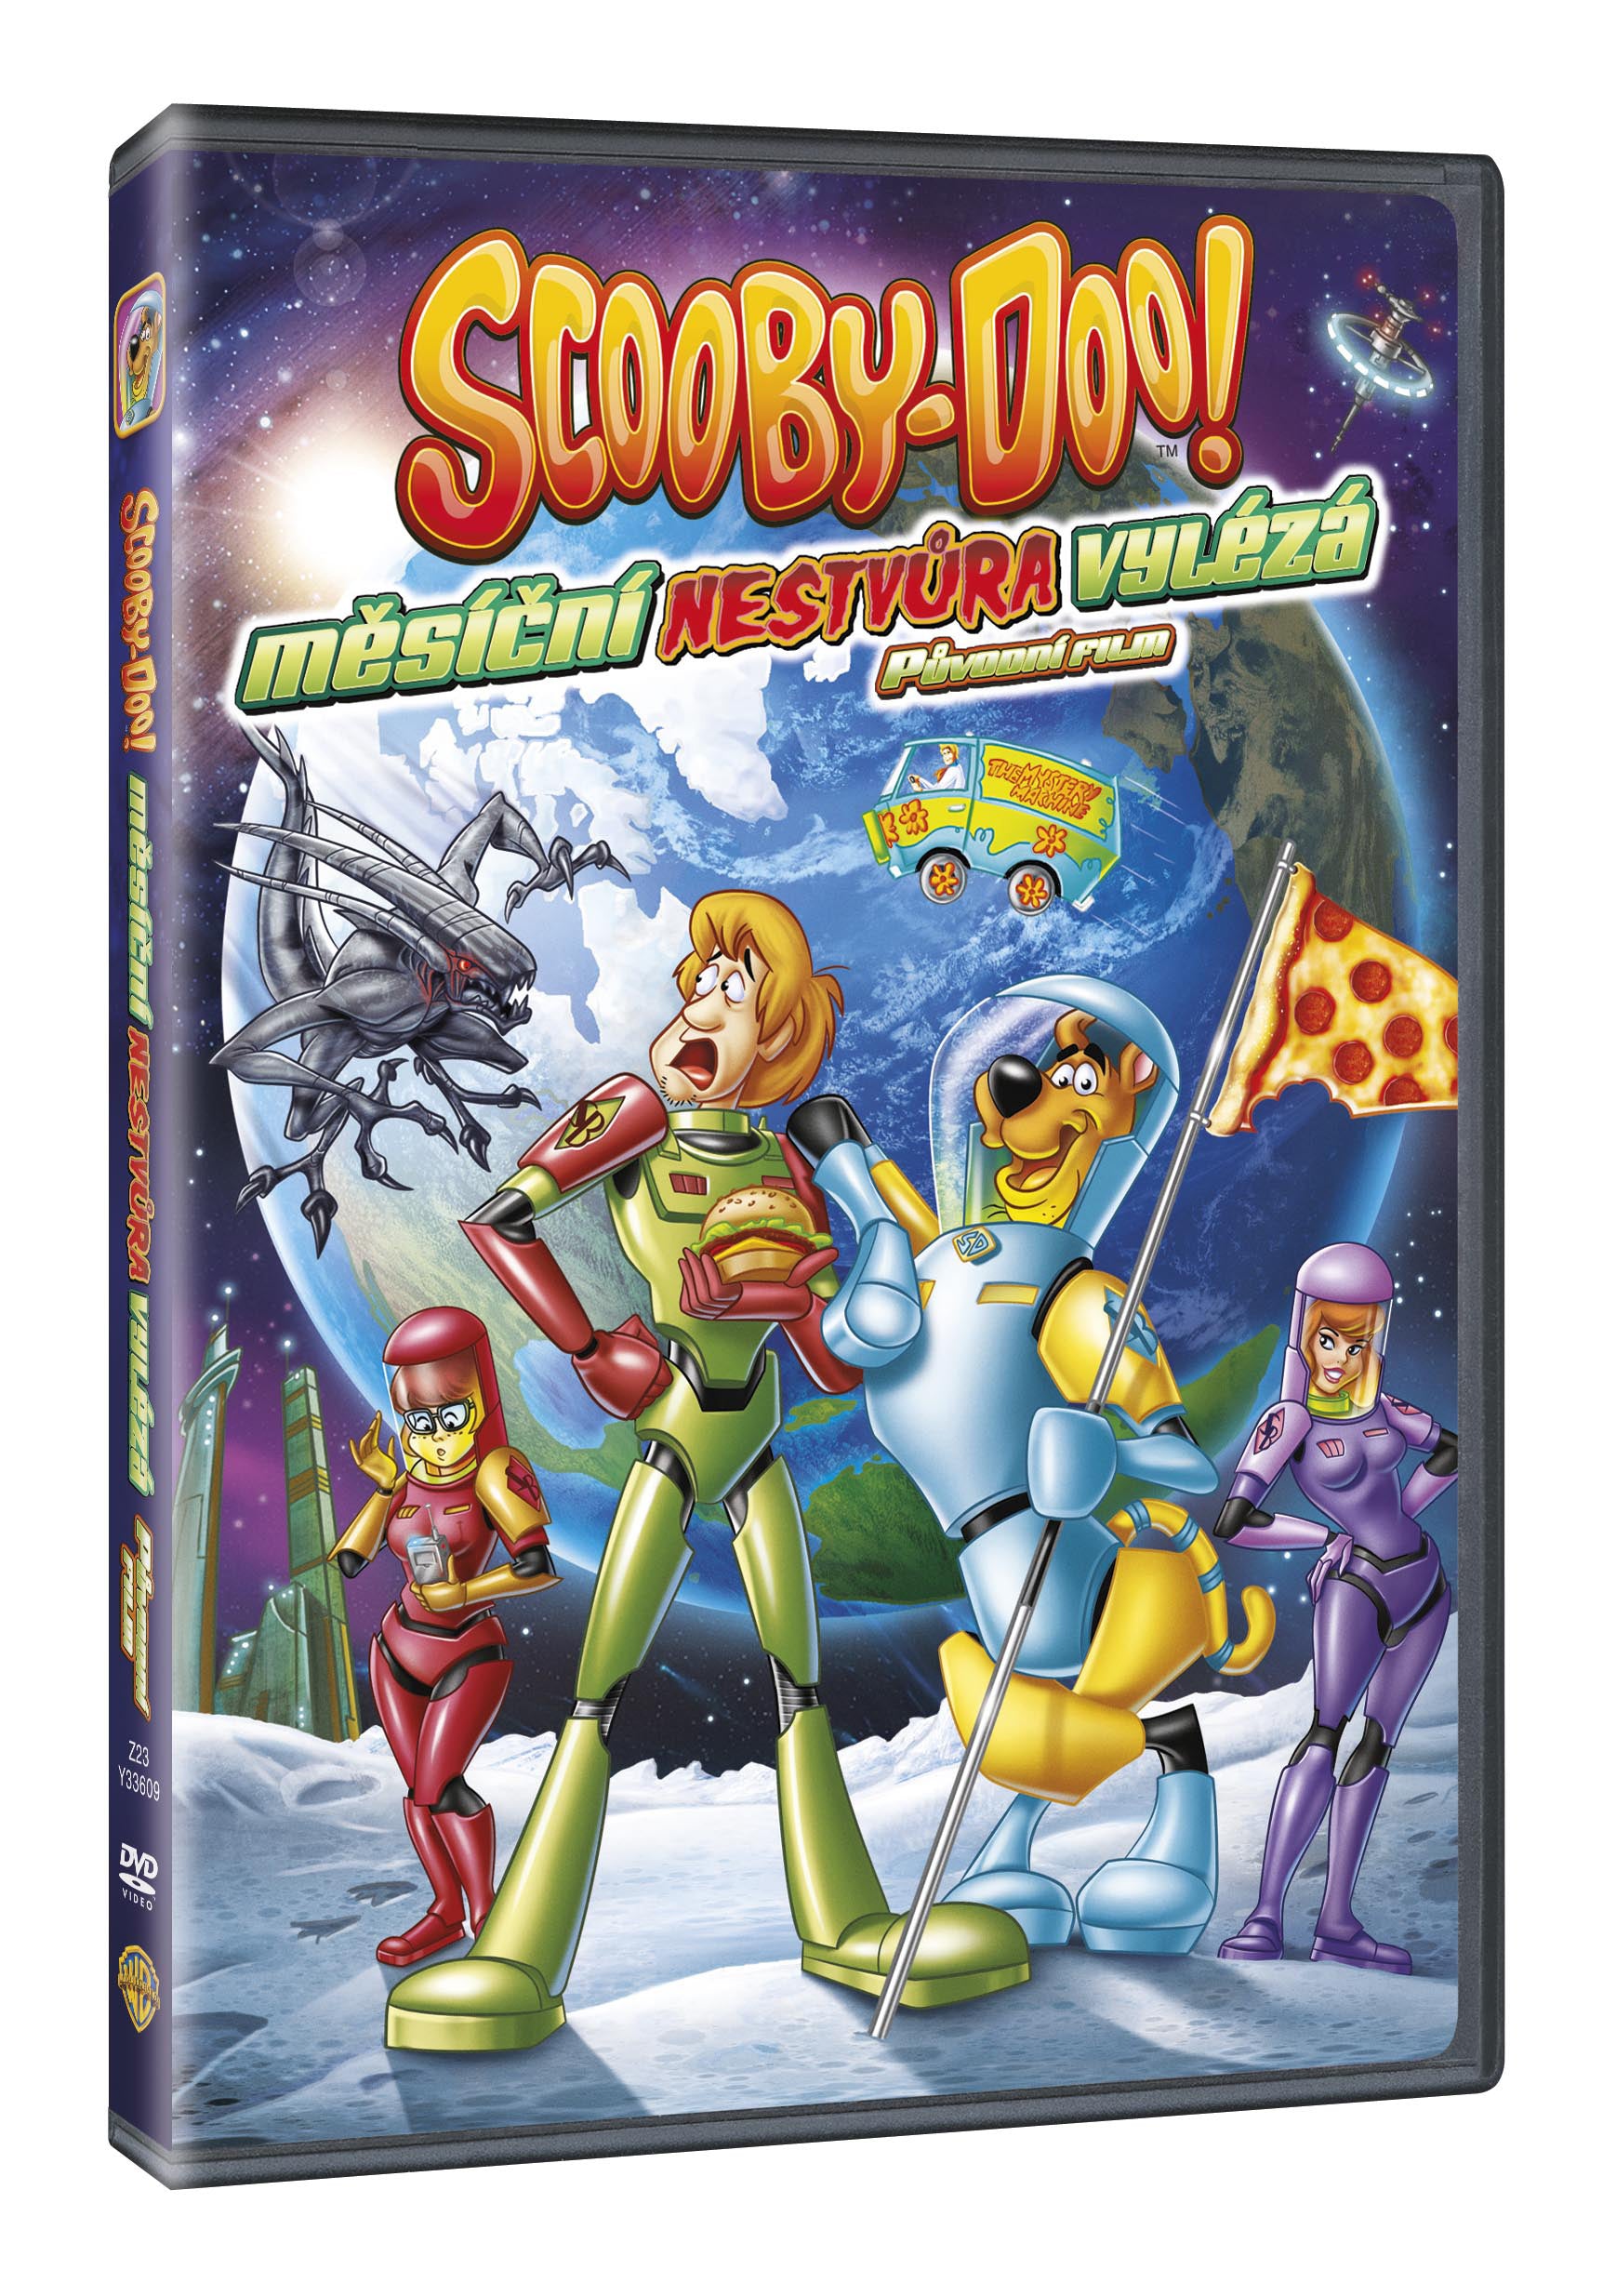 Scooby Doo: Mesicni nestvura vyleza DVD / Scooby-Doo! Mondmonster-Wahnsinn